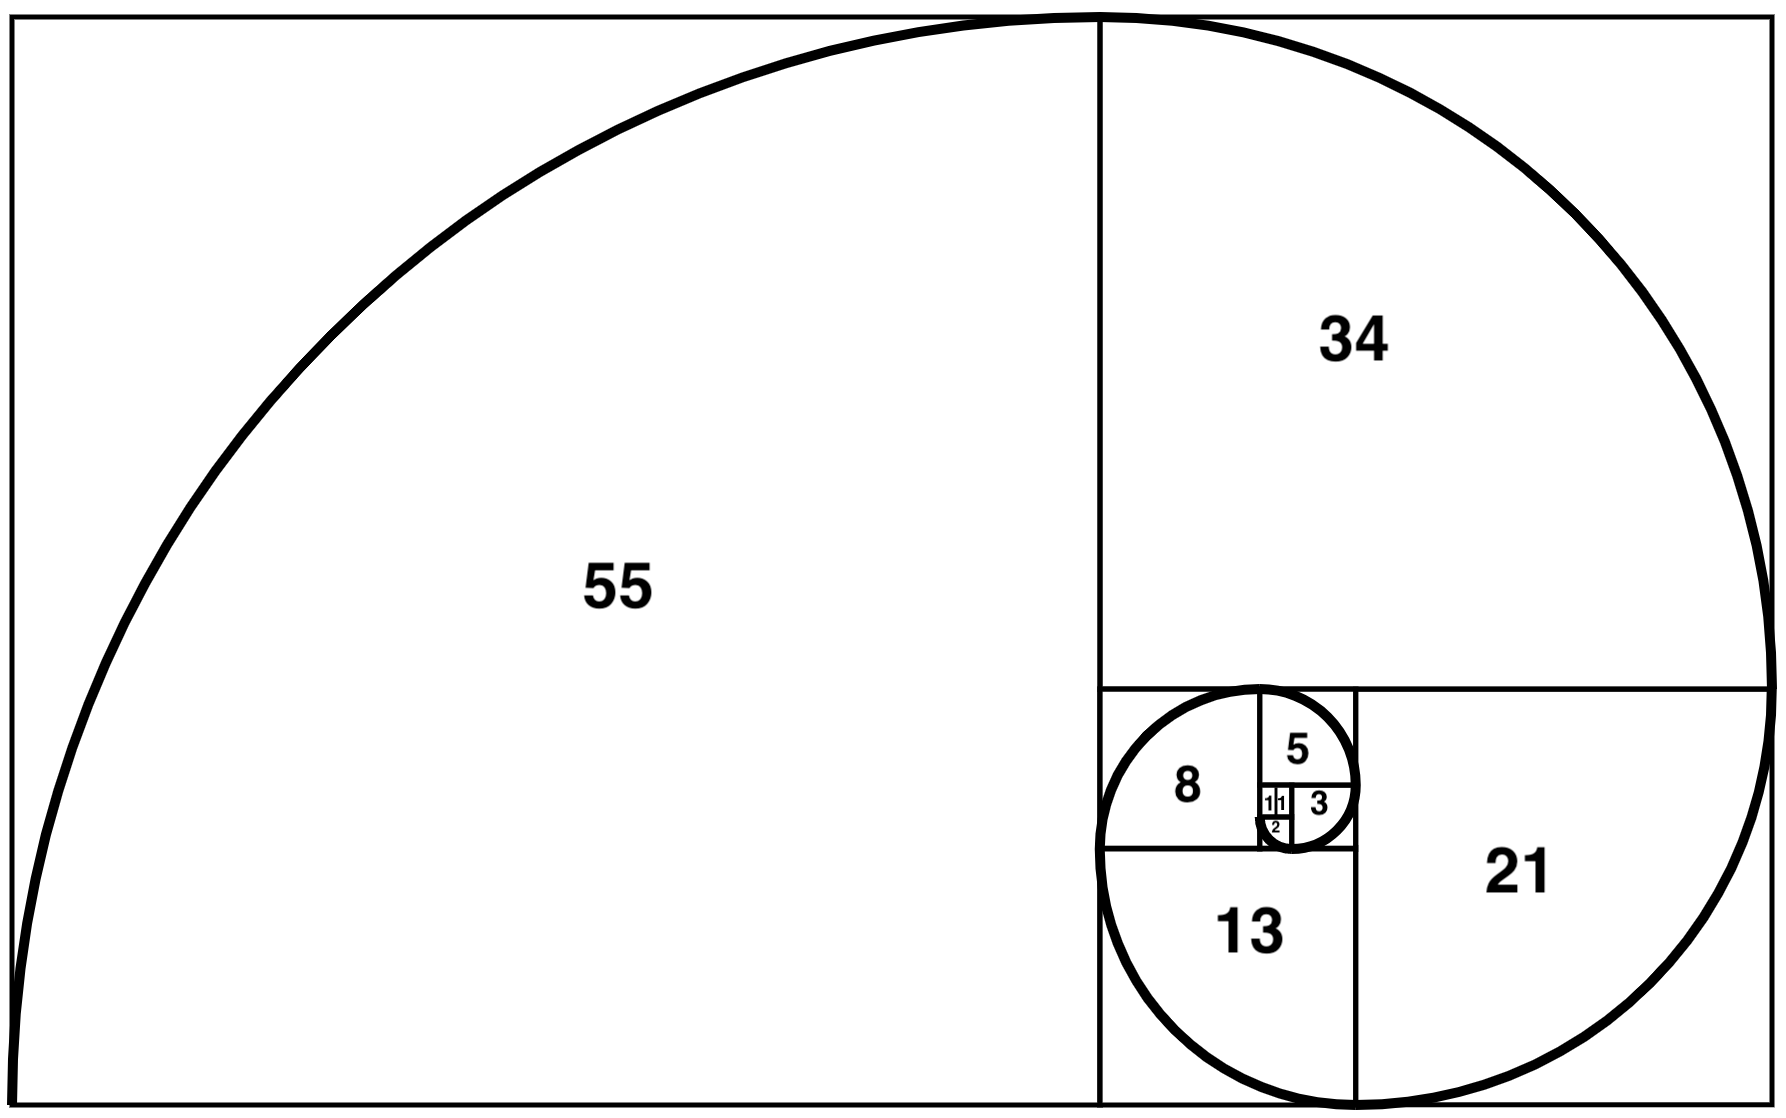 fibonacci spiral golden ratio